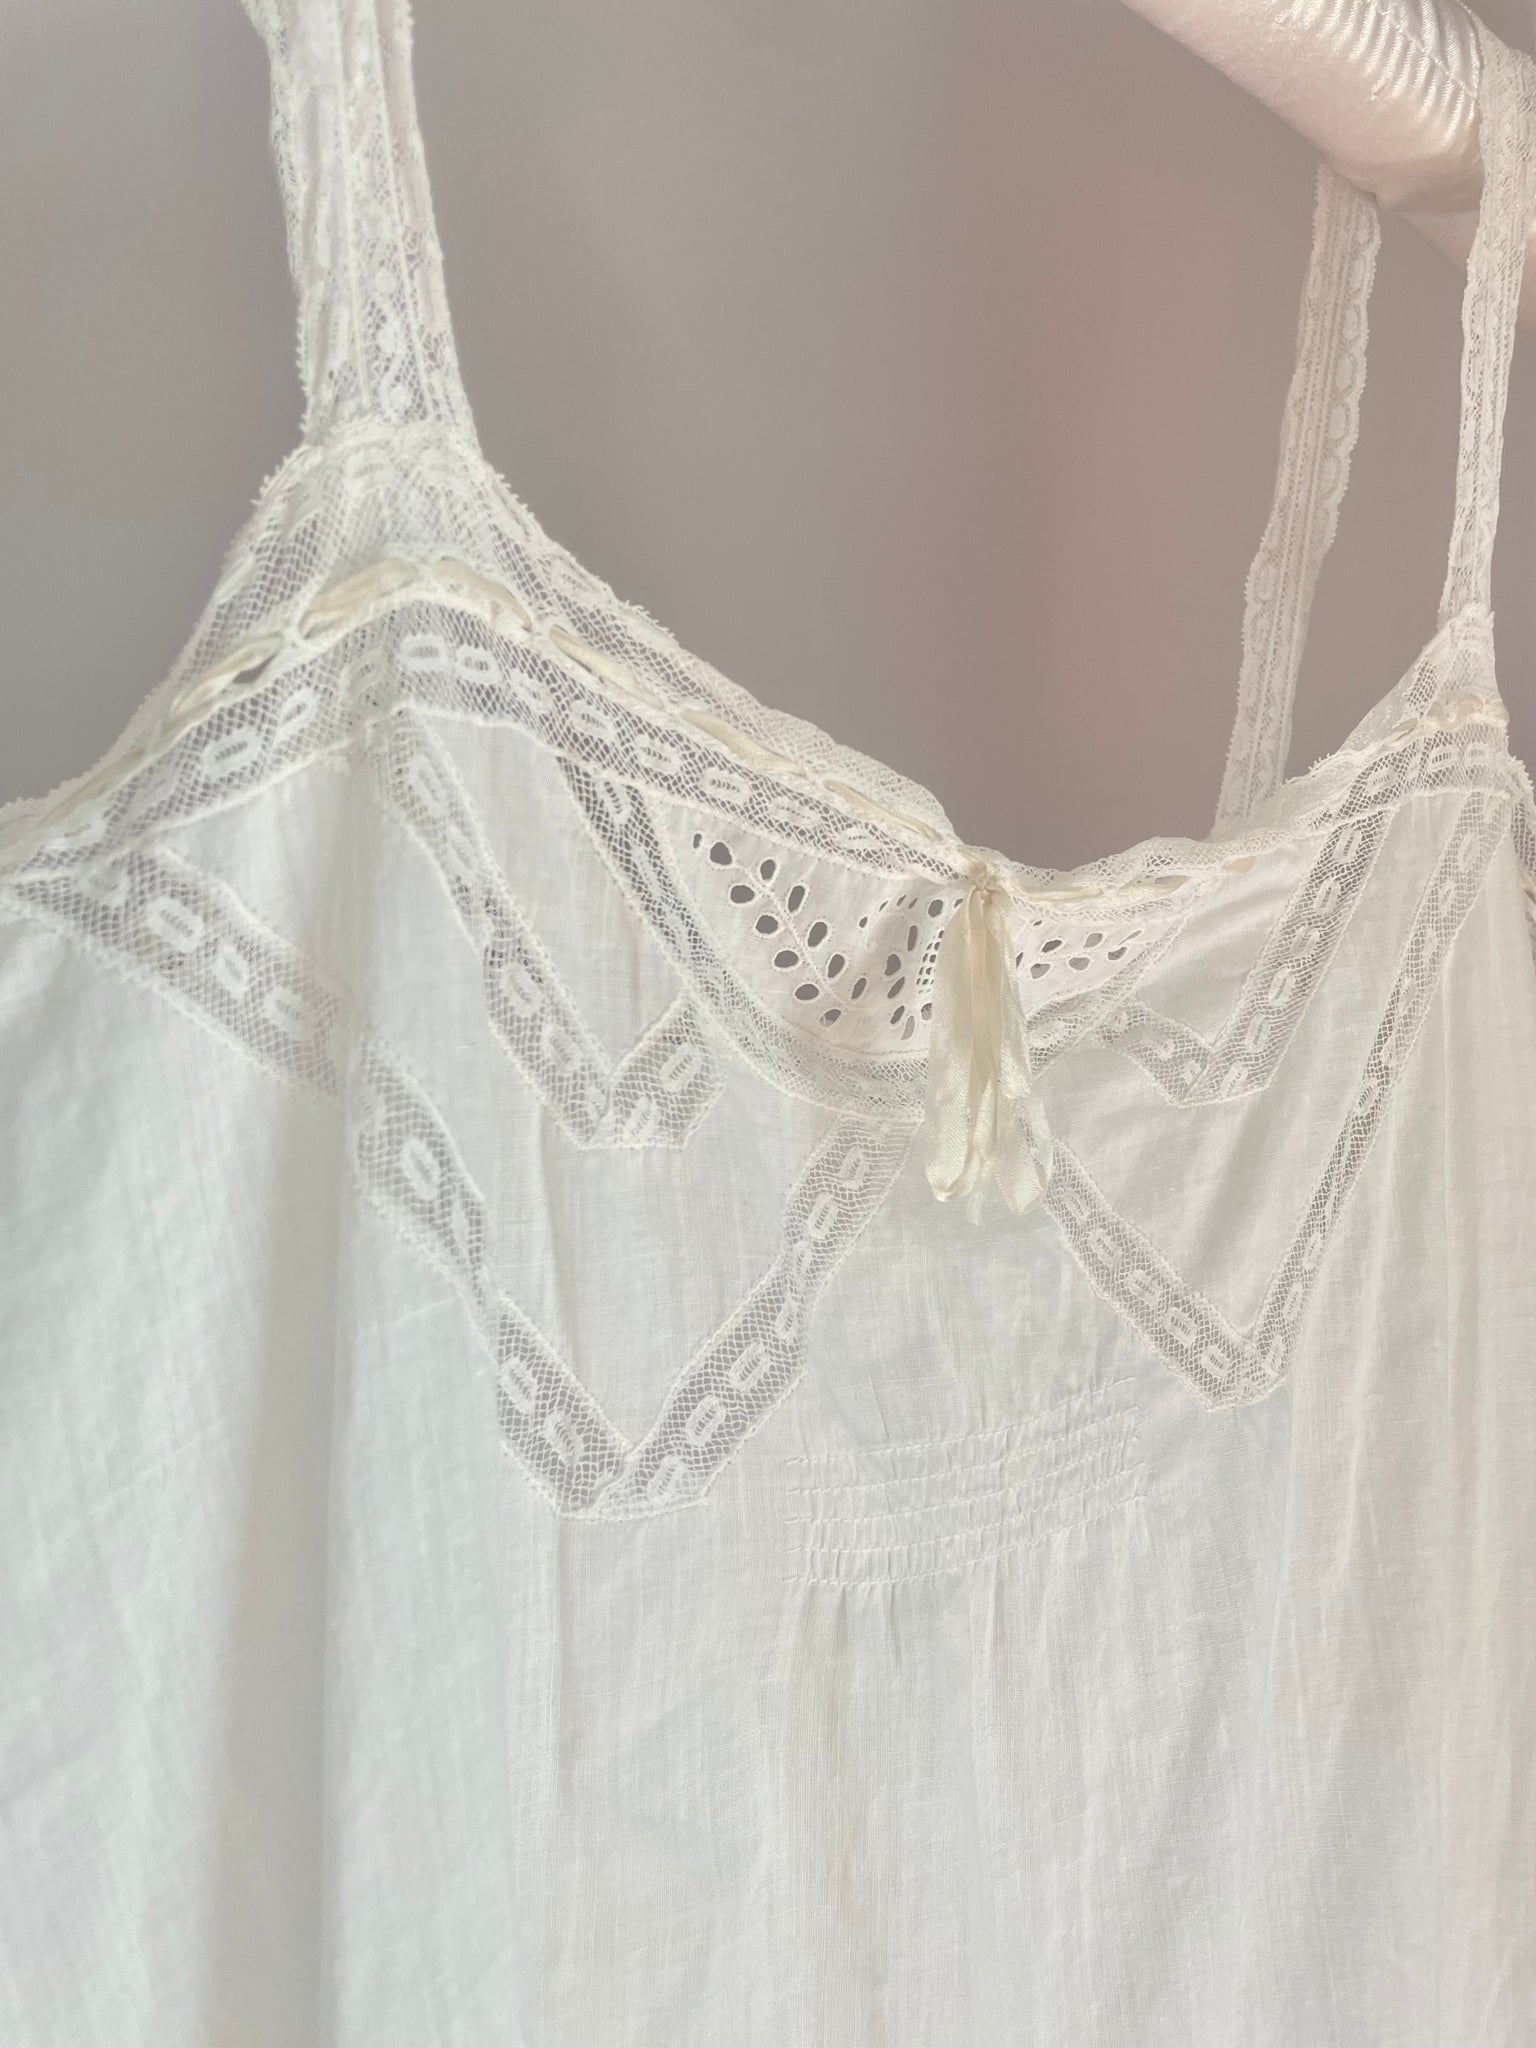 1900s Edwardian Cotton Combinations Split Crotch Orginal Ribbon Lace